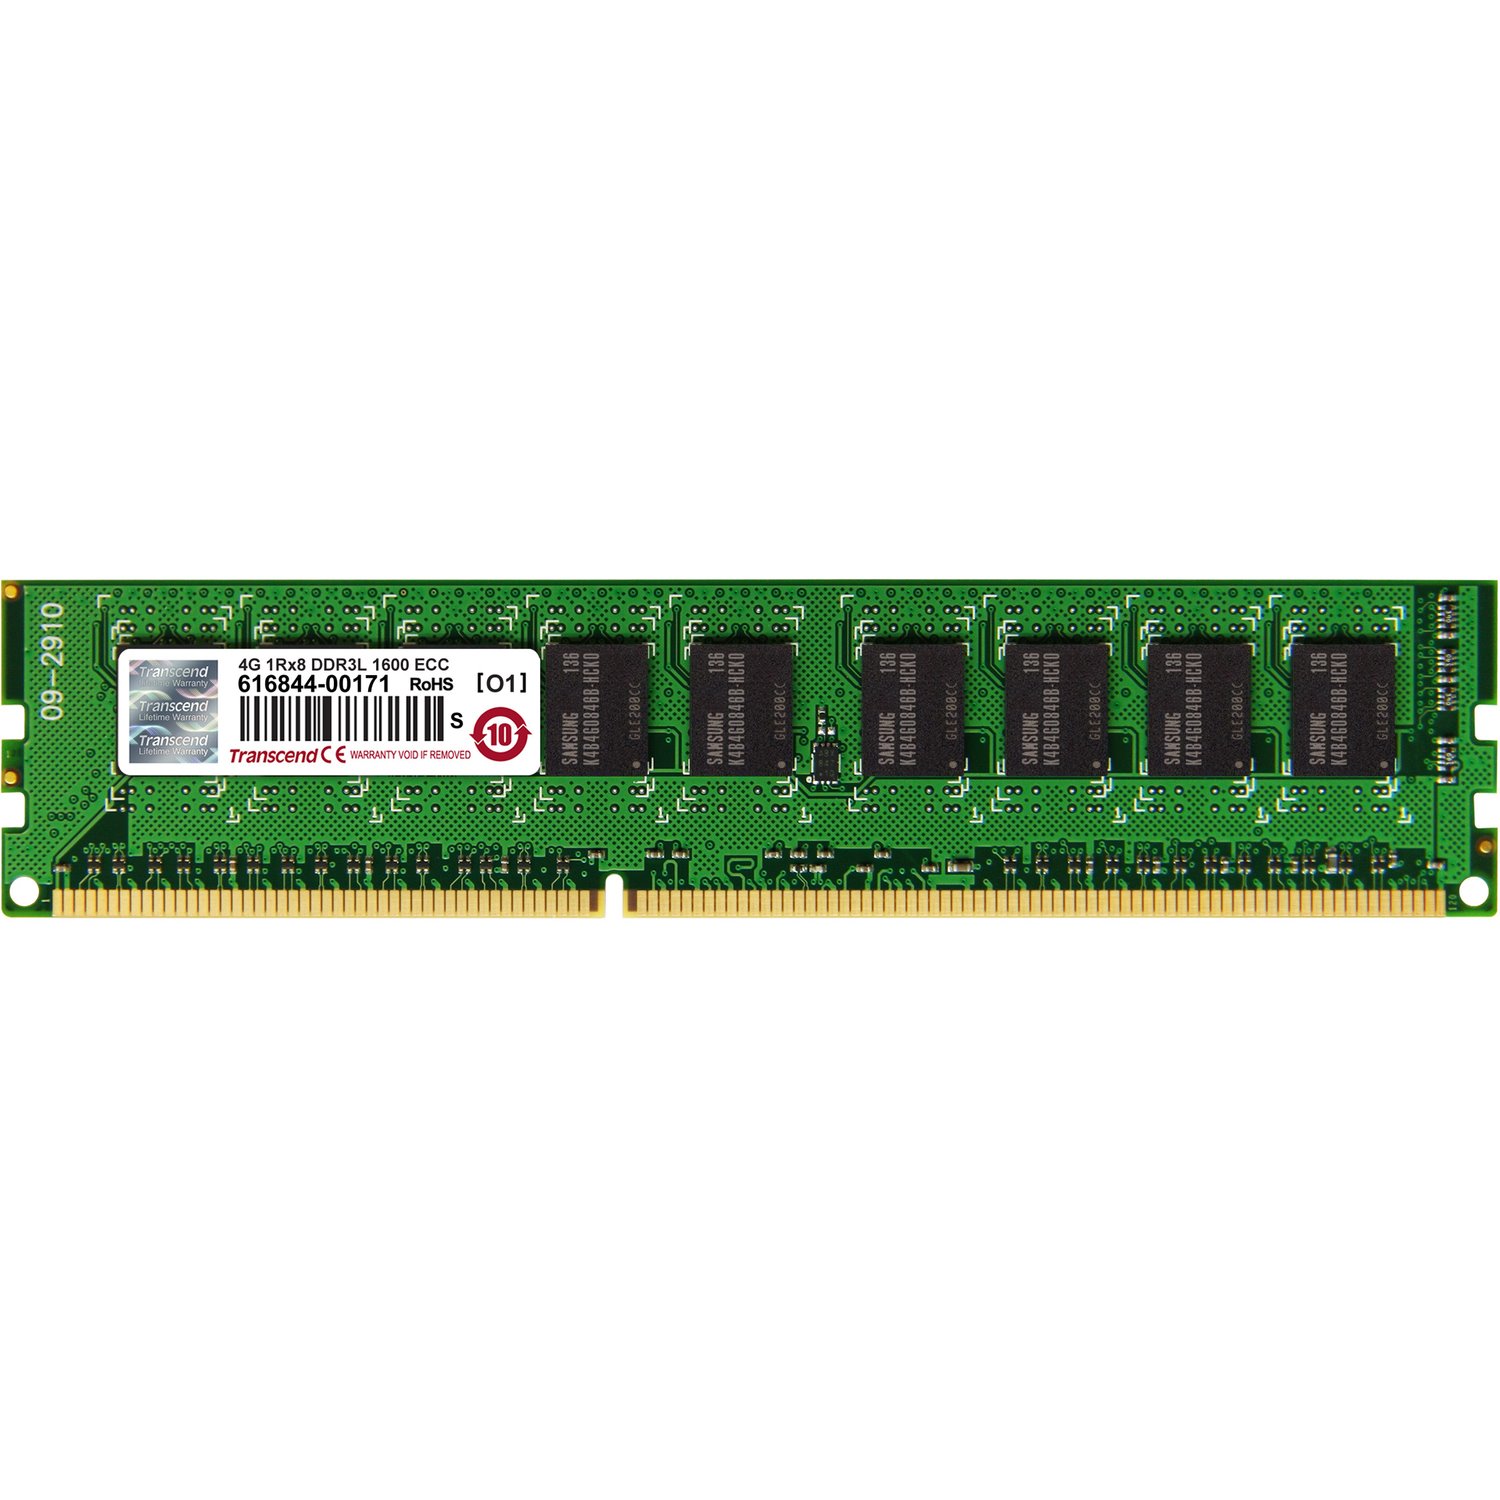 Transcend DDR3L 1600 ECC-DIMM 4GB CL11 1Rx8 1.35V